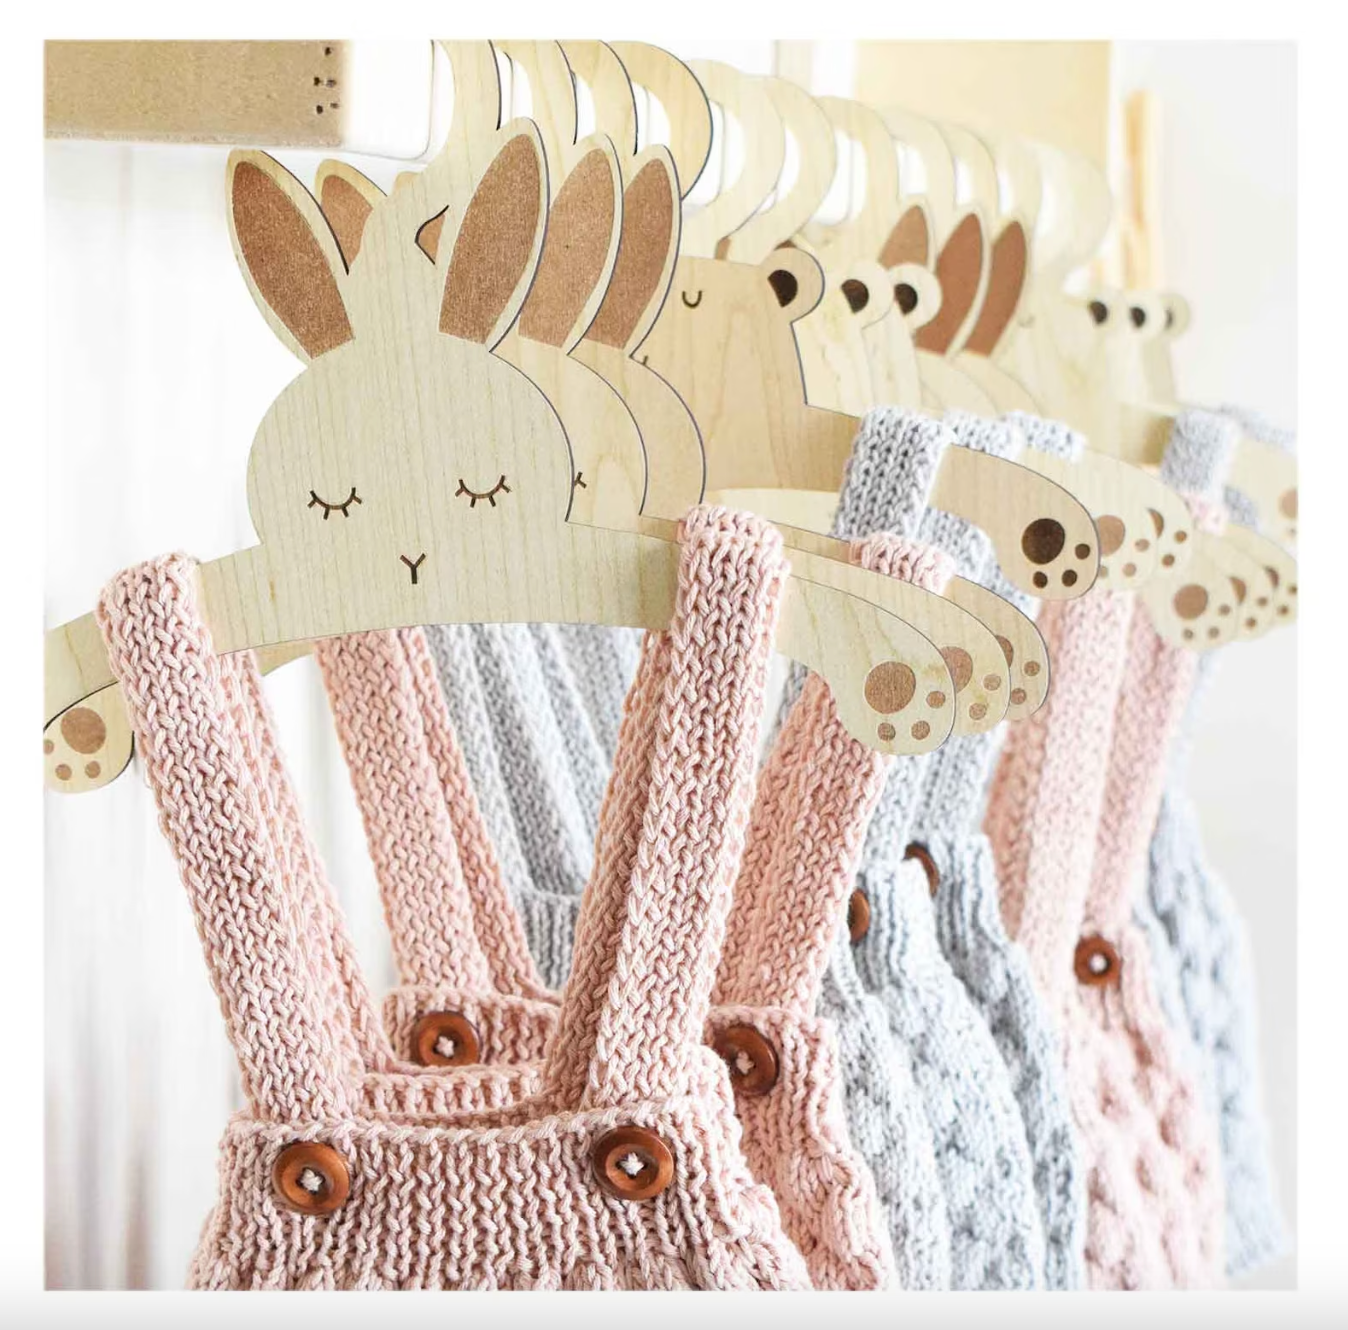 EnjoyMyDesign - Wooden Animal Baby Hangers, Wooden Baby Closet Hangers - Bunny / 35 Pcs